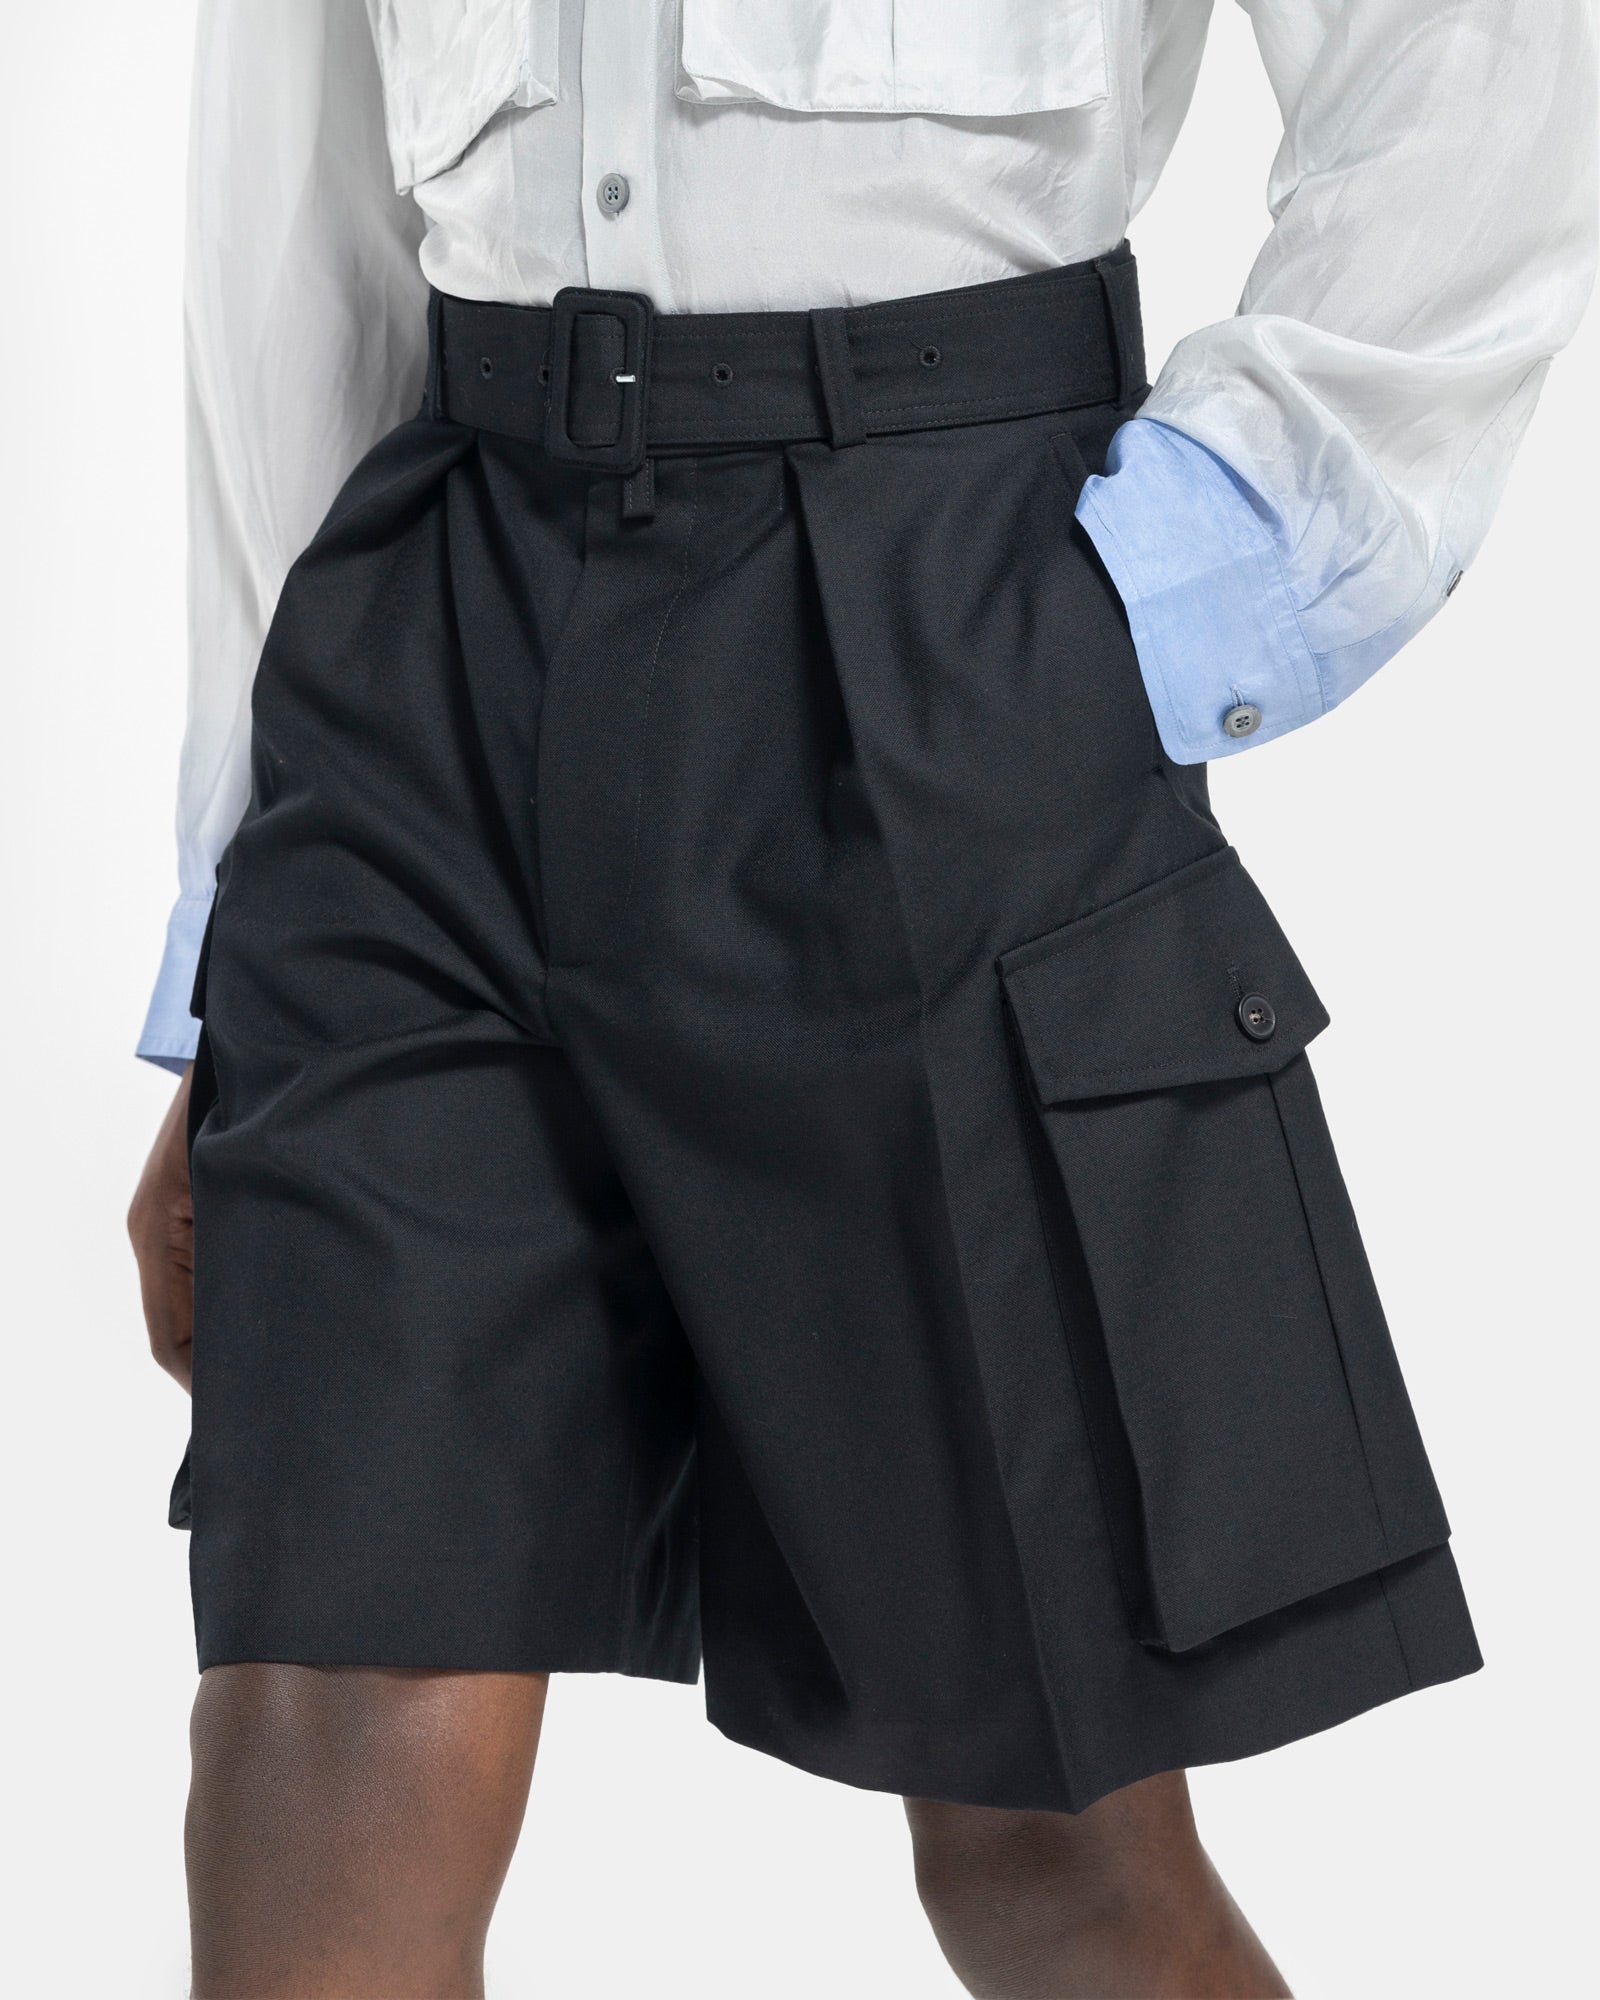 Close up Model wearing Dries Van Noten Piers Bis Shorts in Black on white background